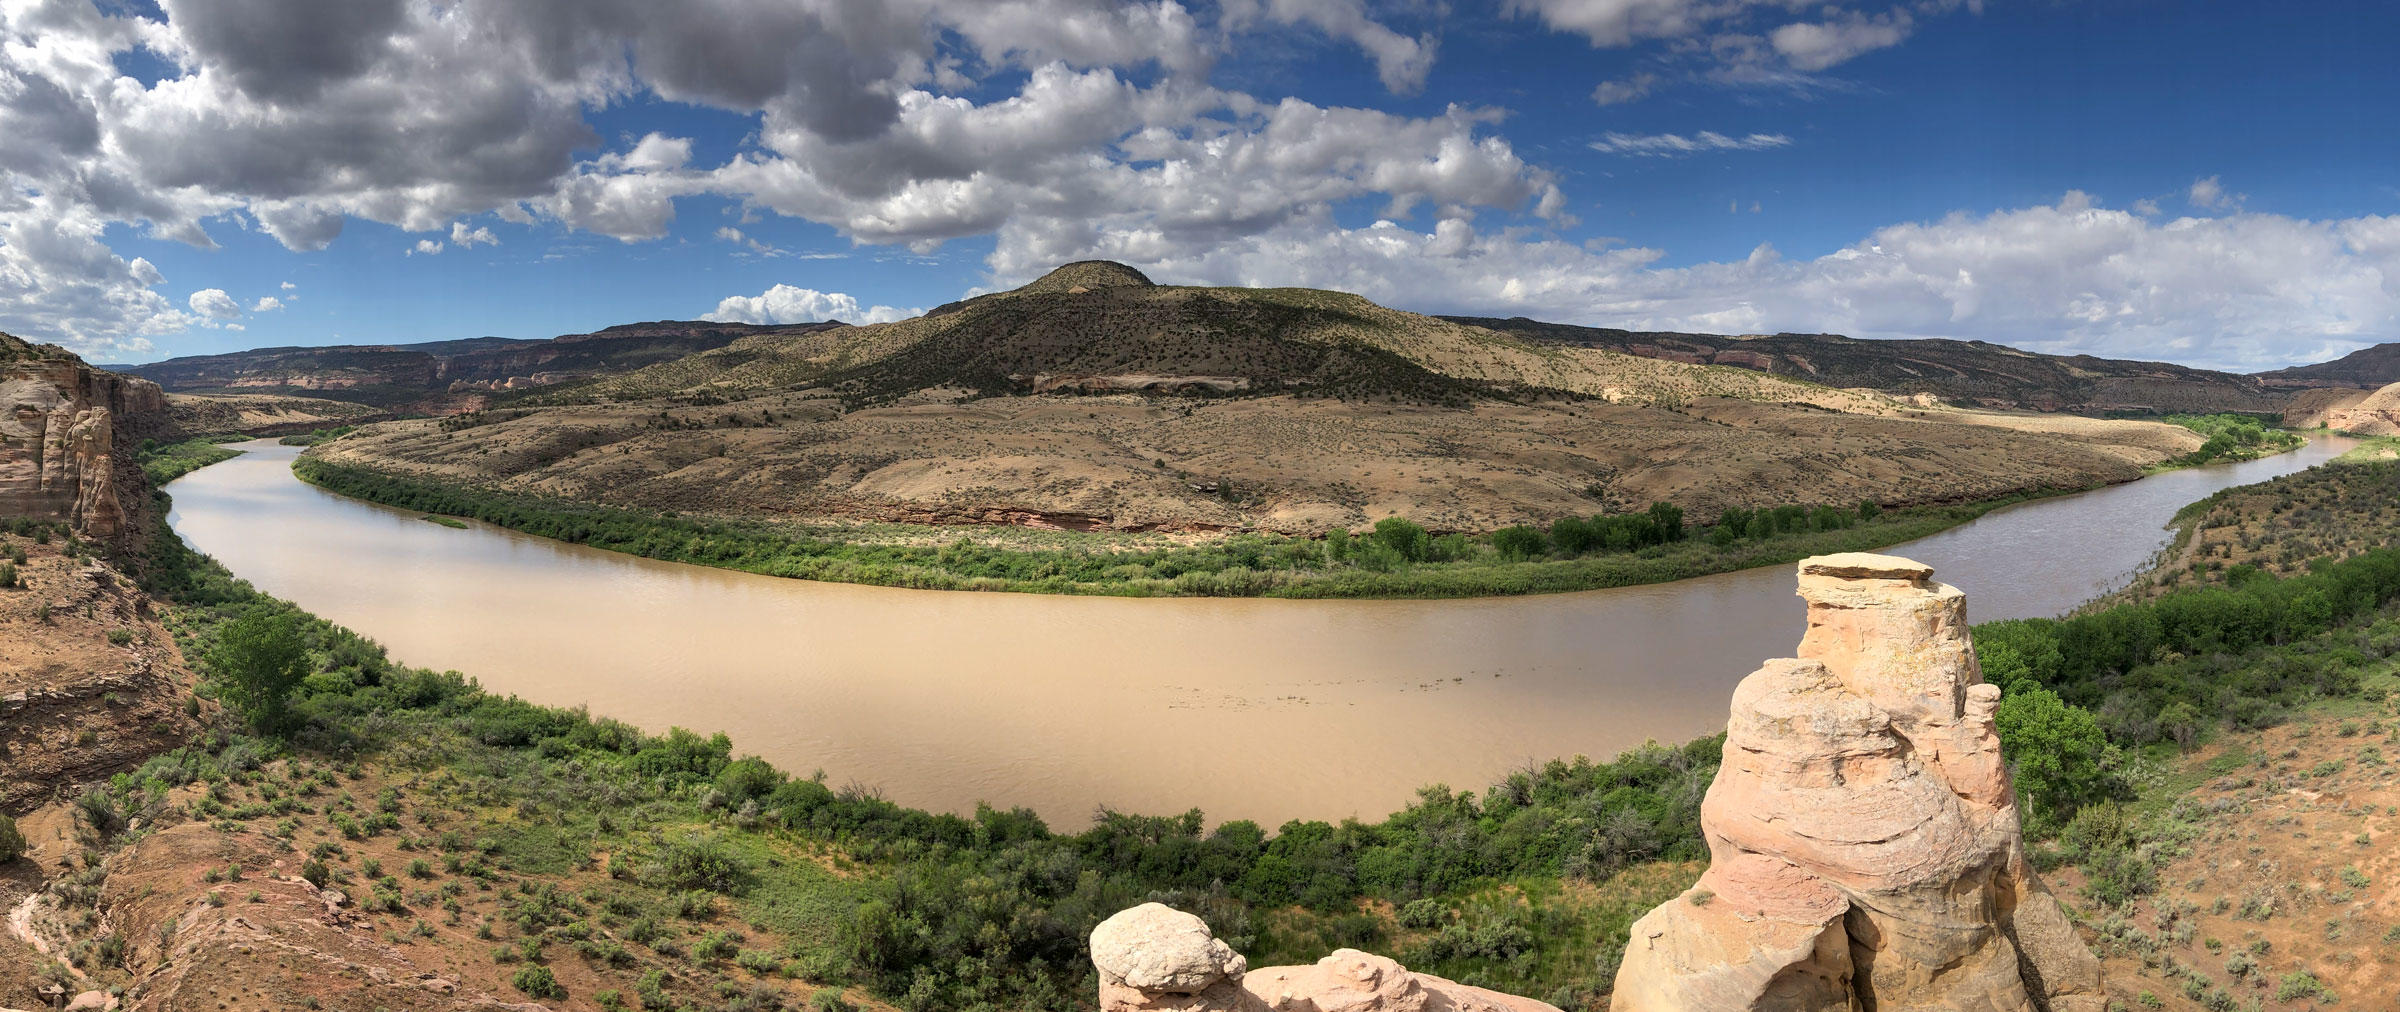 The Colorado River.